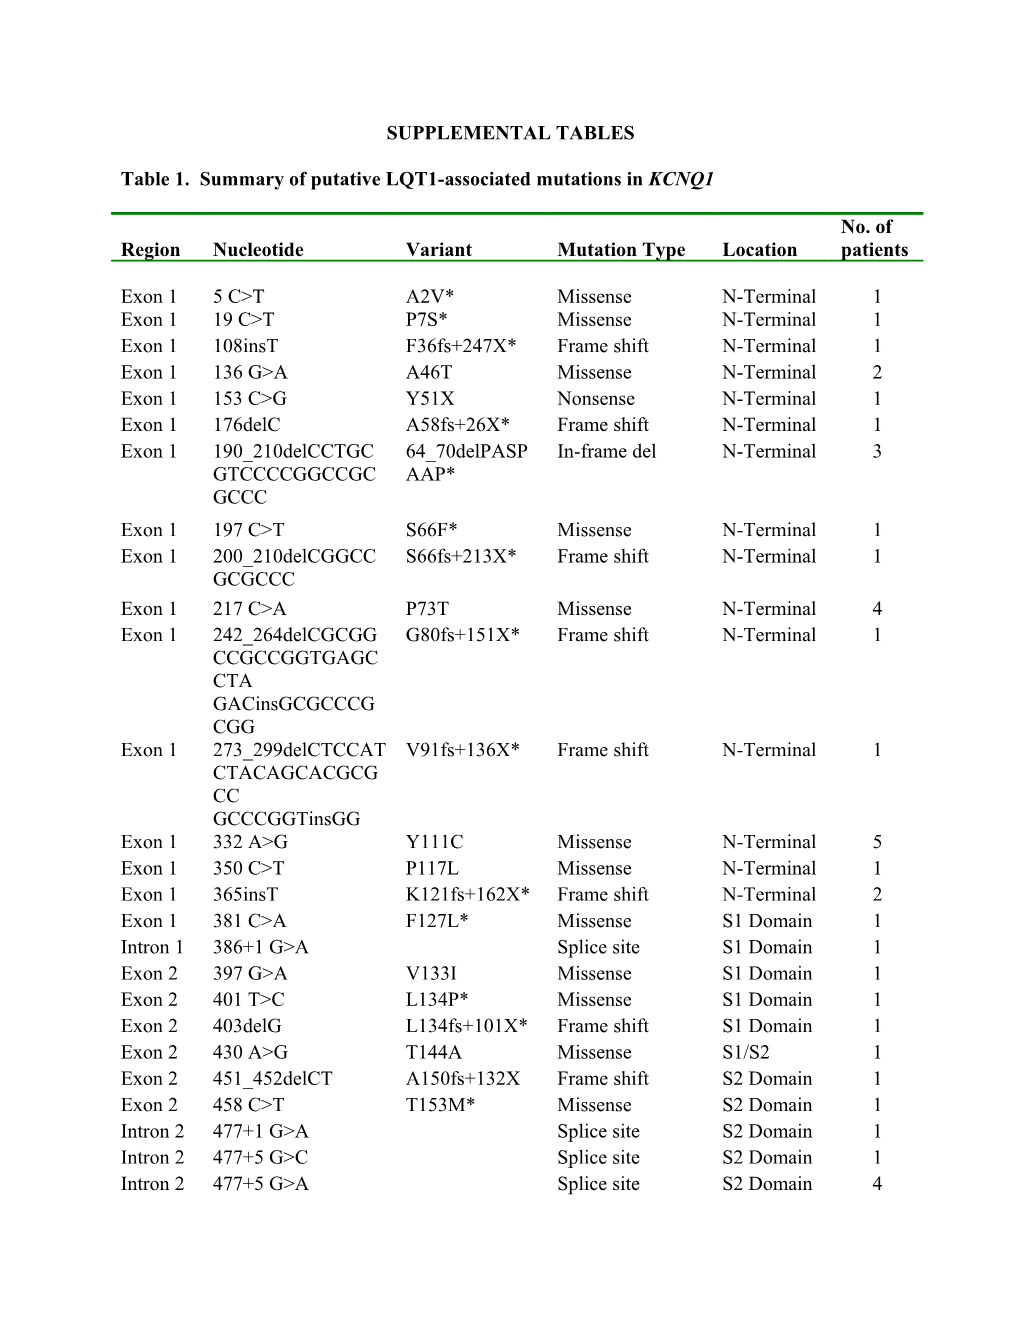 Table 1. Summary of Putative LQT1-Associated Mutations in KCNQ1